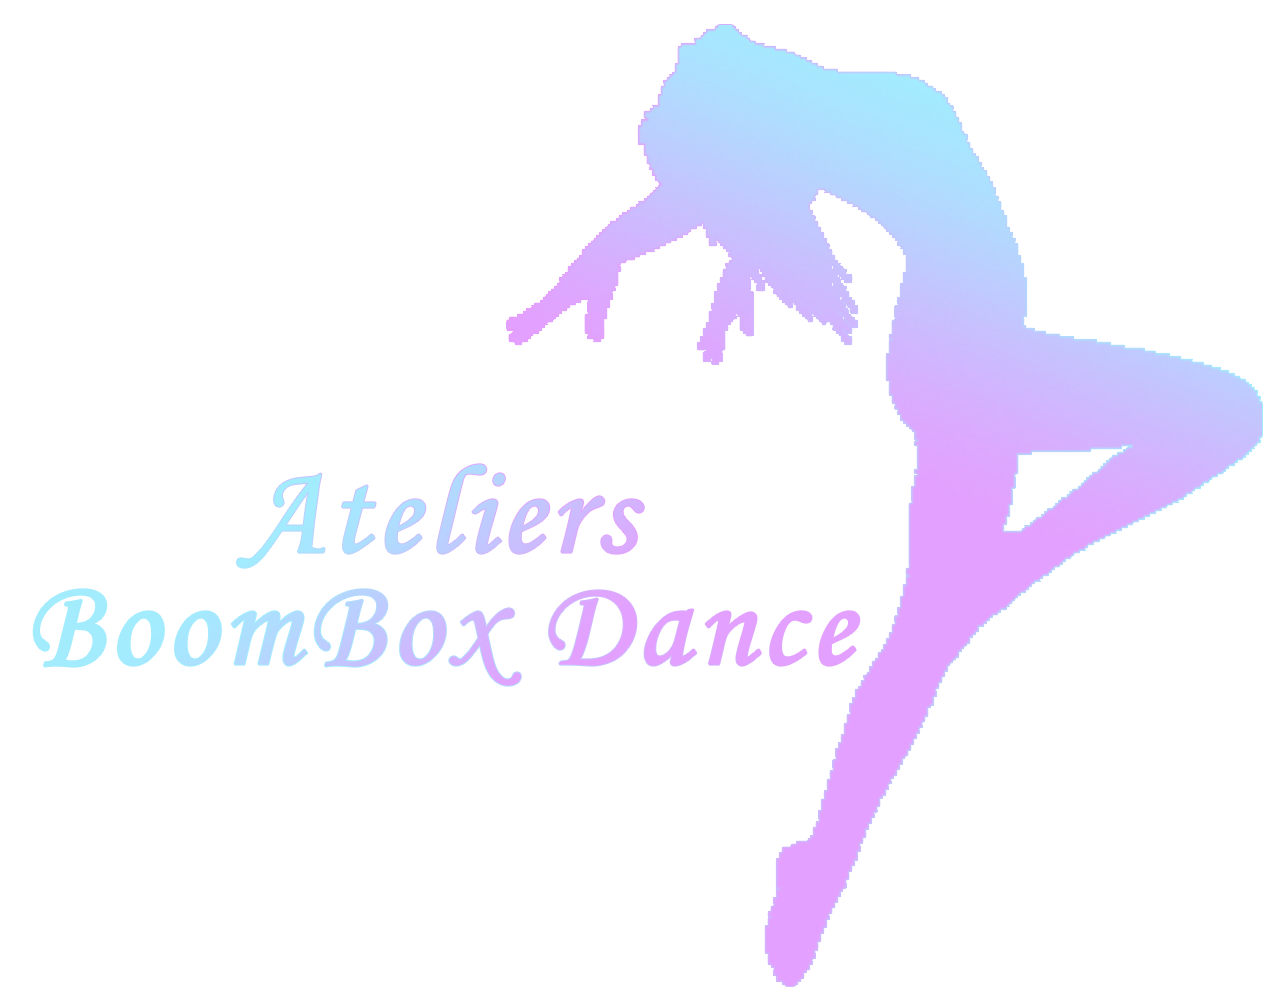 Ateliers Boombox Dance